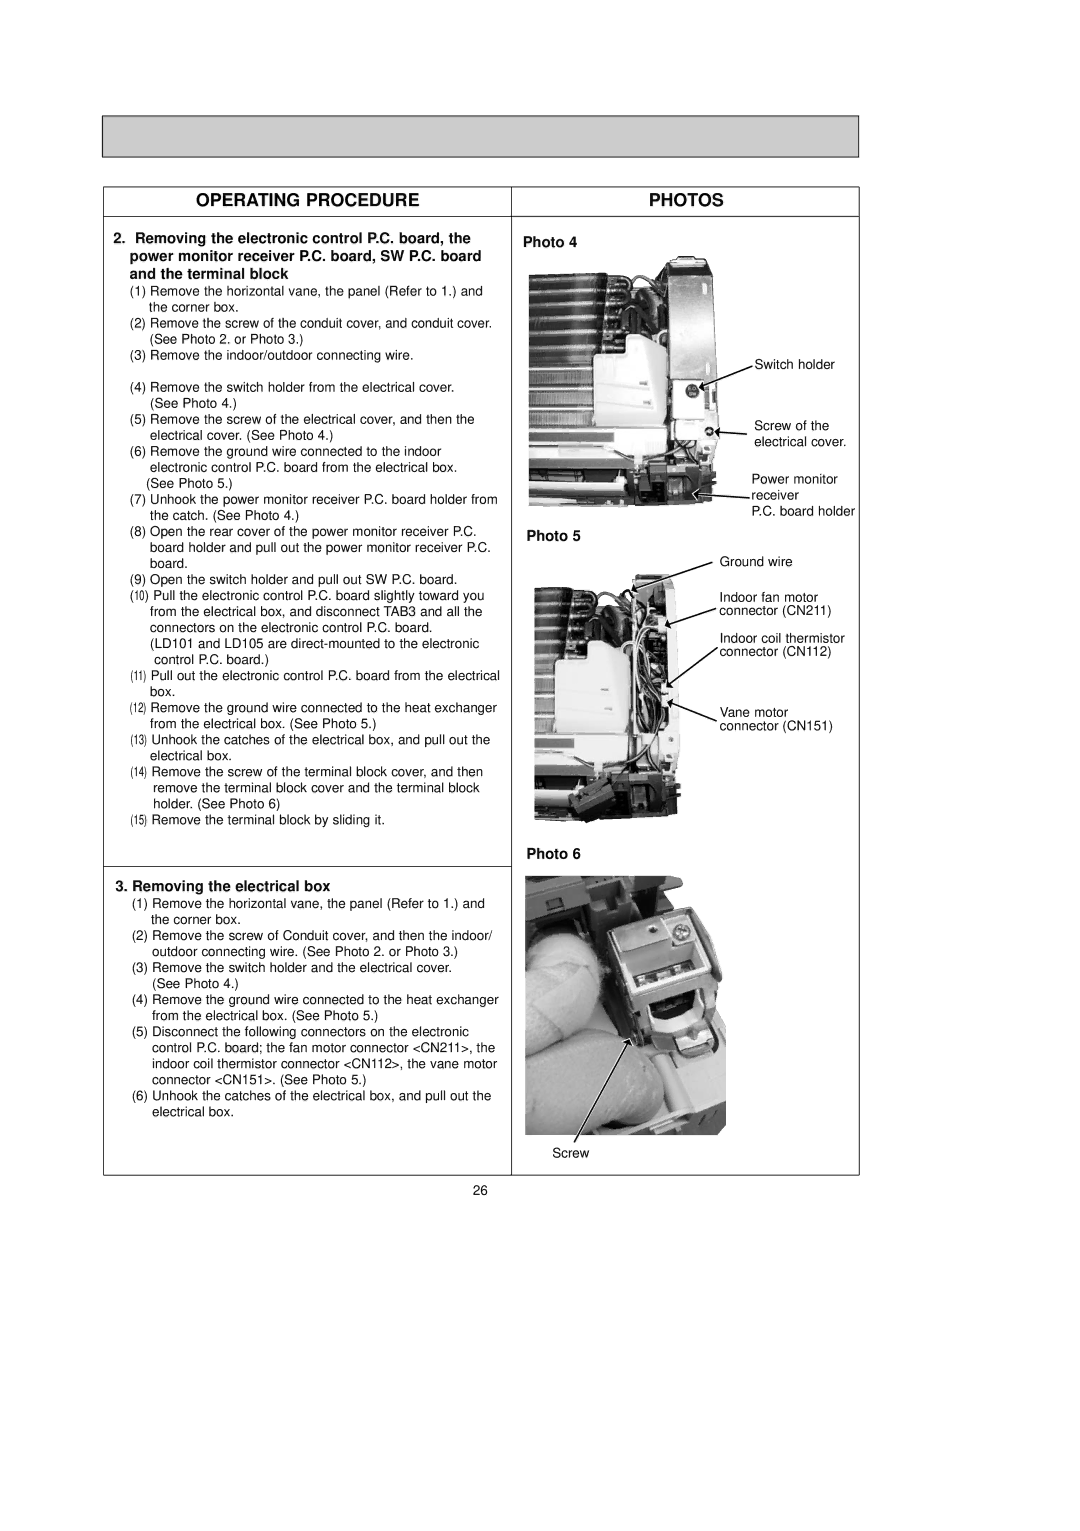 Mitsubishi Electronics MSY-A17NA, MSY-A24NA, MSY-A15NA Operating Procedure Photos, Photo Removing the electrical box 